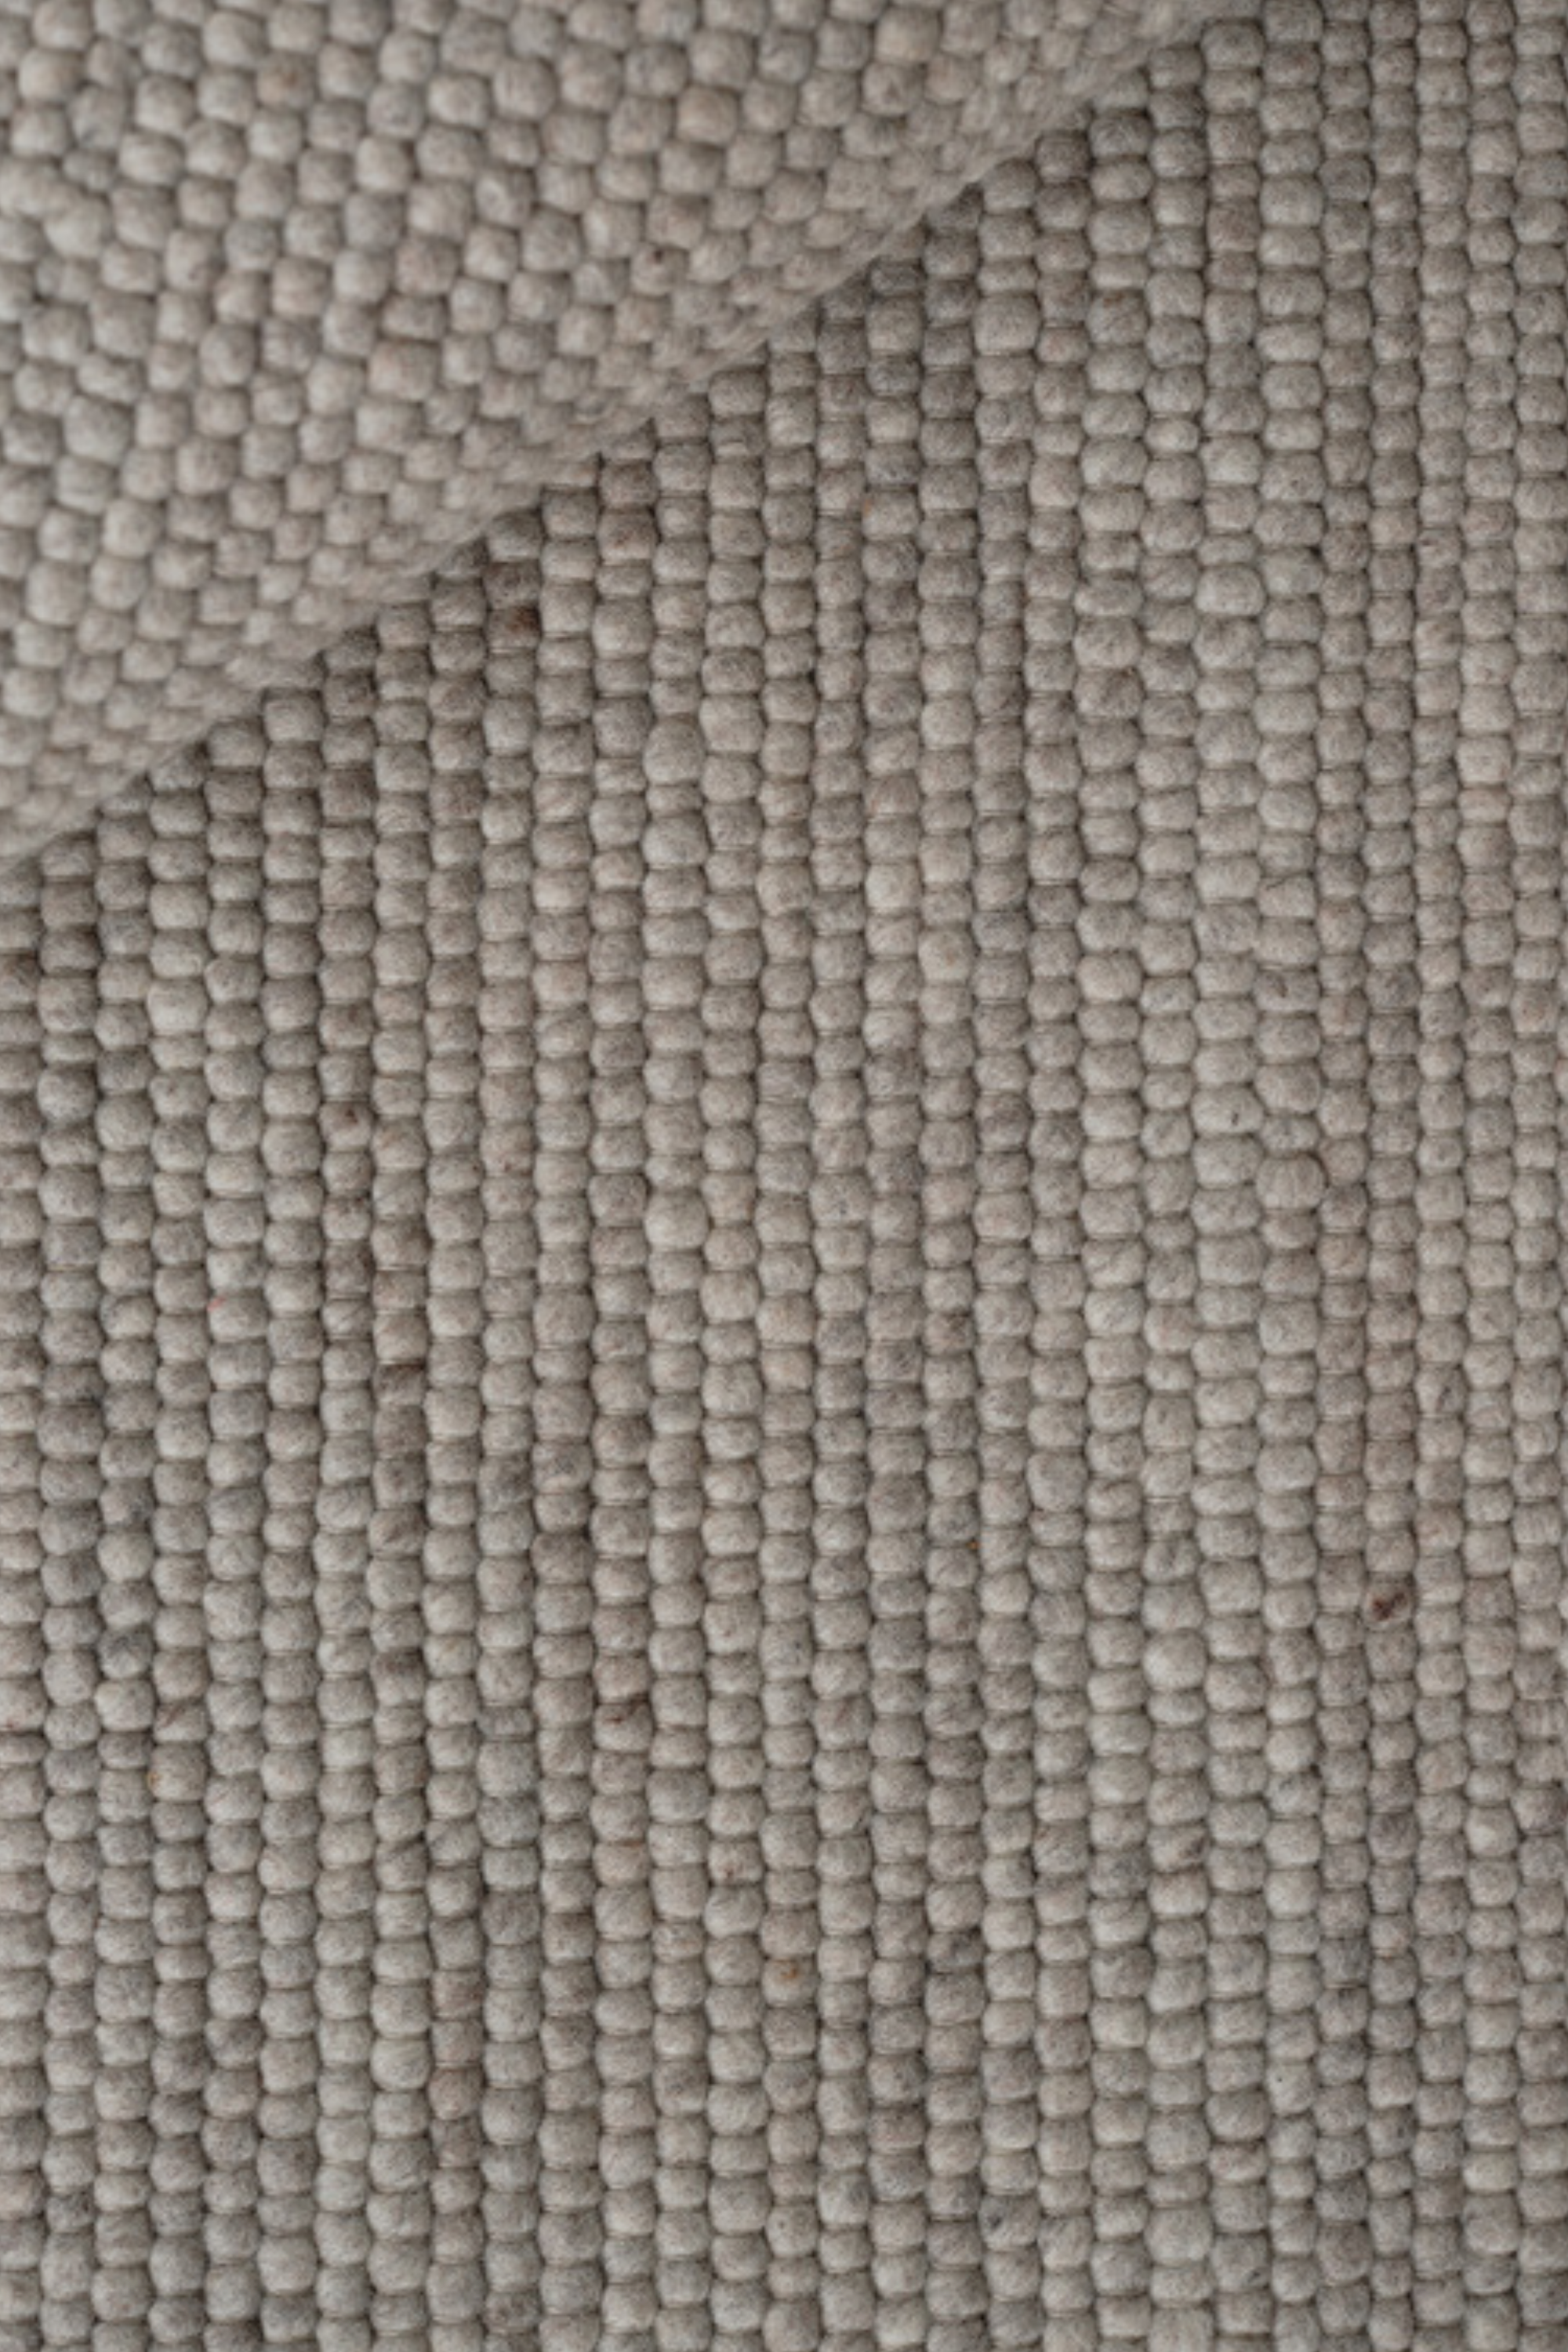 Light grey textured woven rug